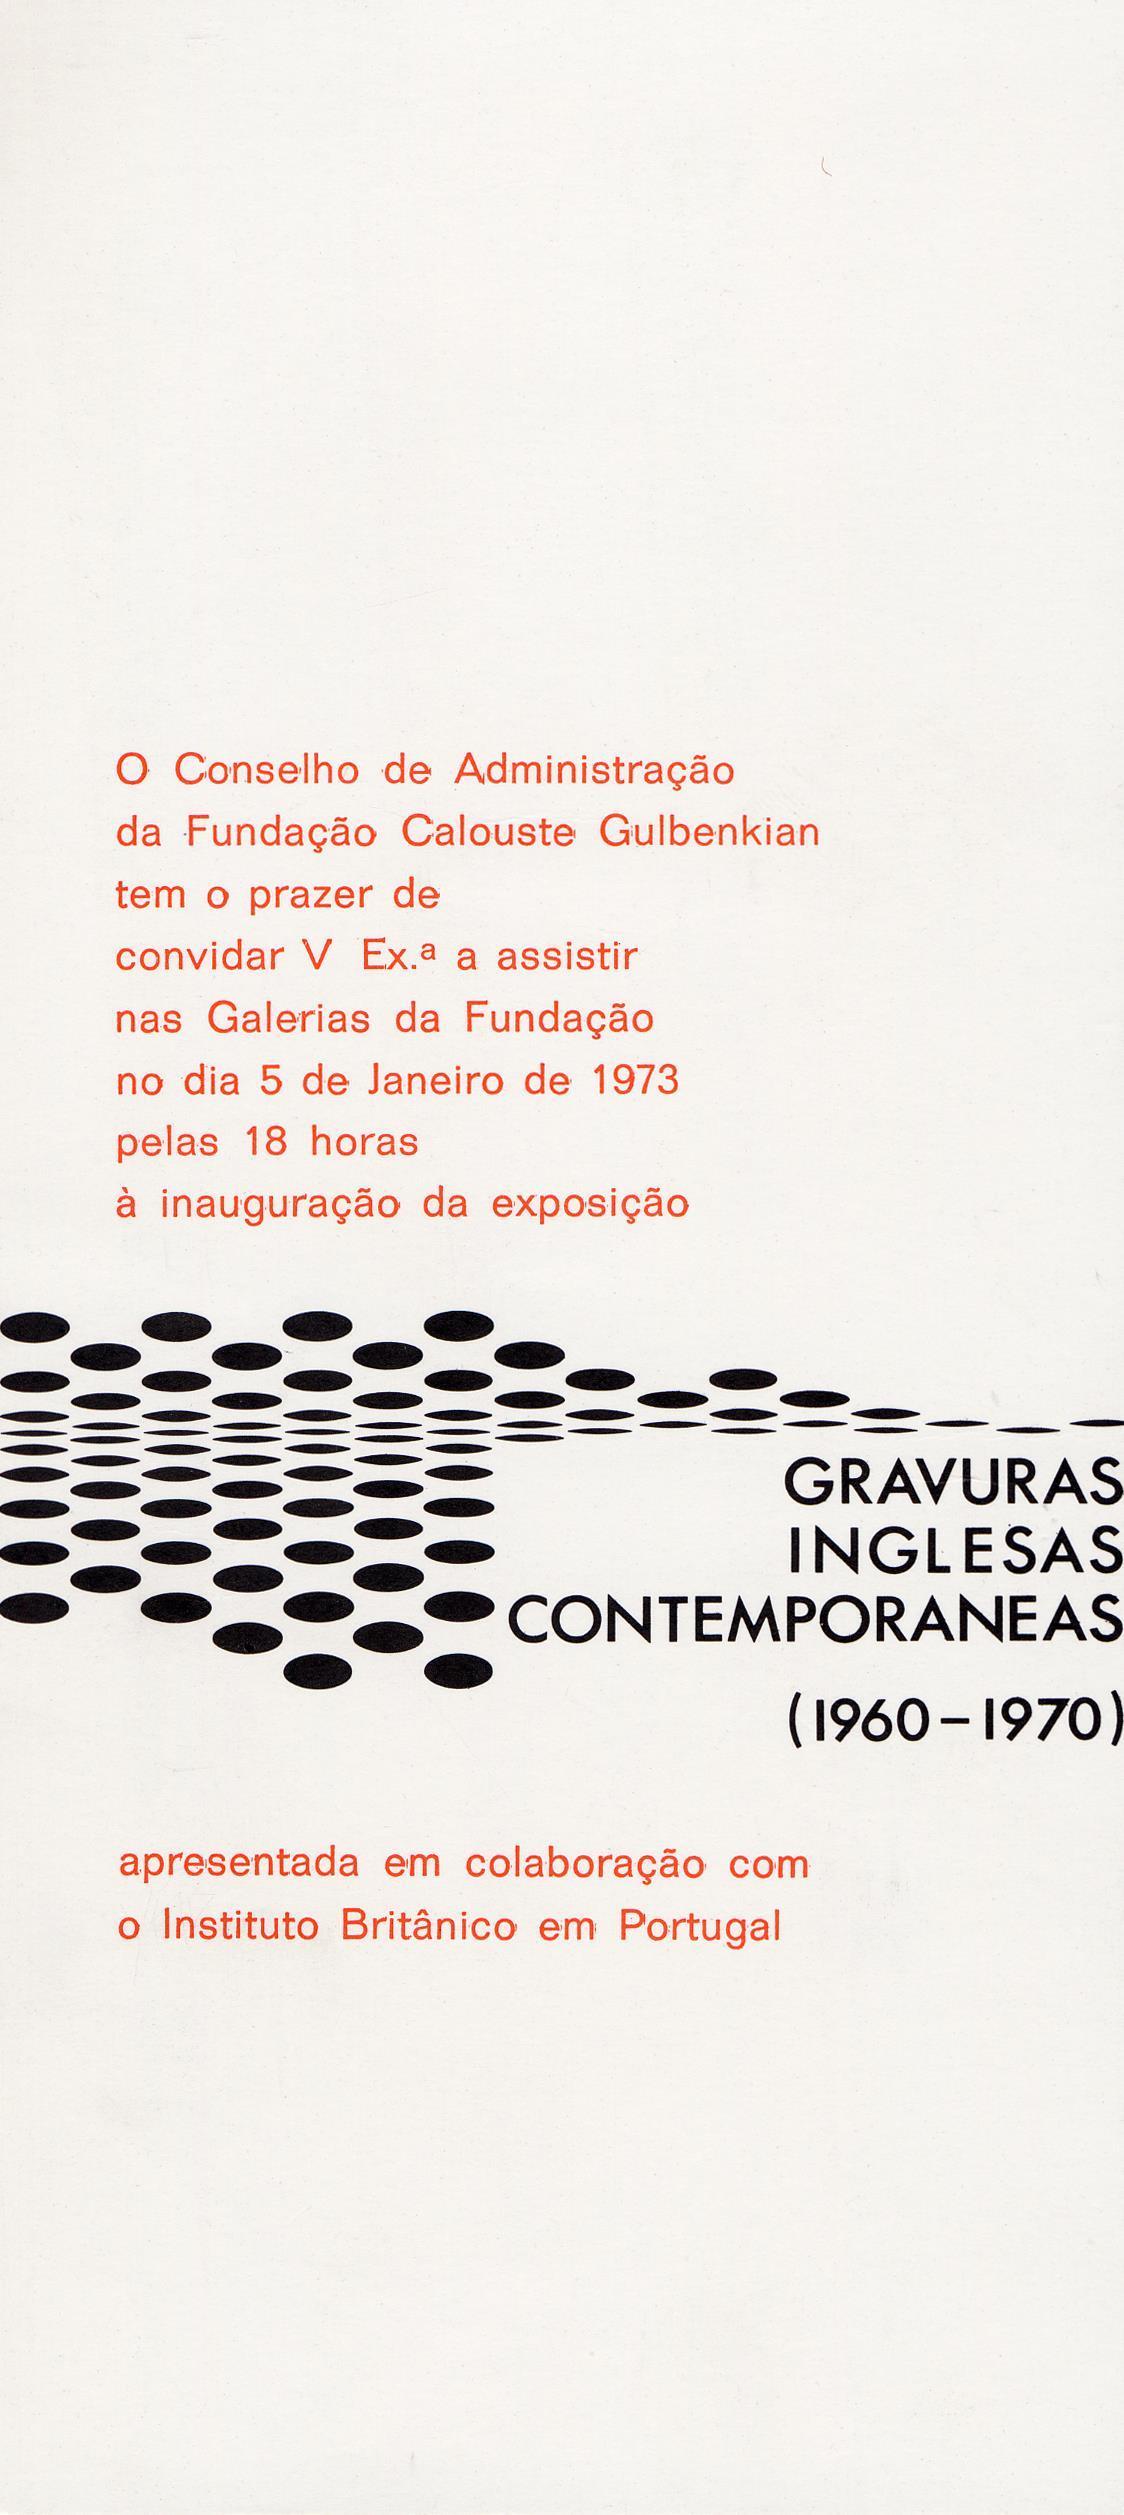 Gravuras Inglesas Contemporâneas, 1960 – 1970